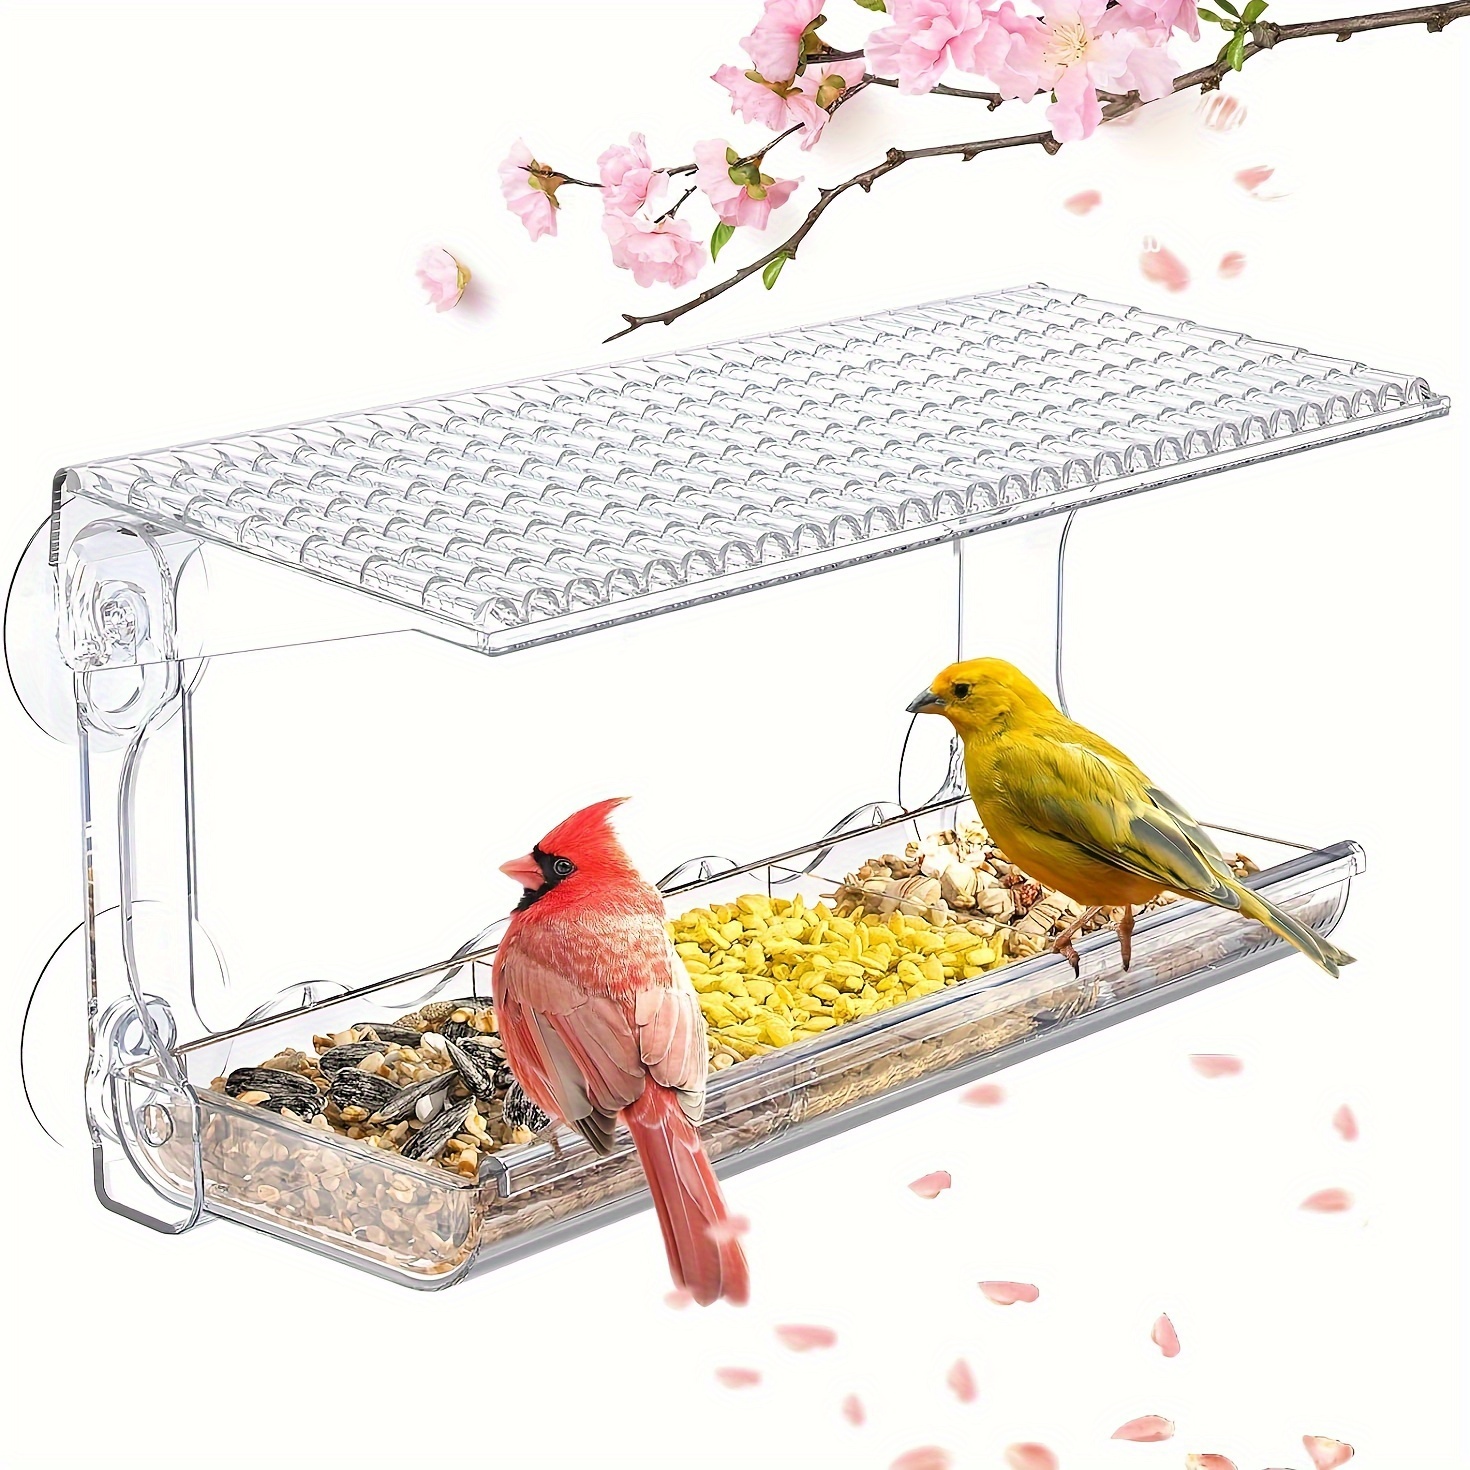 

Acrylic Window Bird Feeder With Strong Suction Cups, Outdoor Transparent Bird House Feeder For Wild Birds, Weatherproof Bird Feeding Station - Holds 480ml Seed